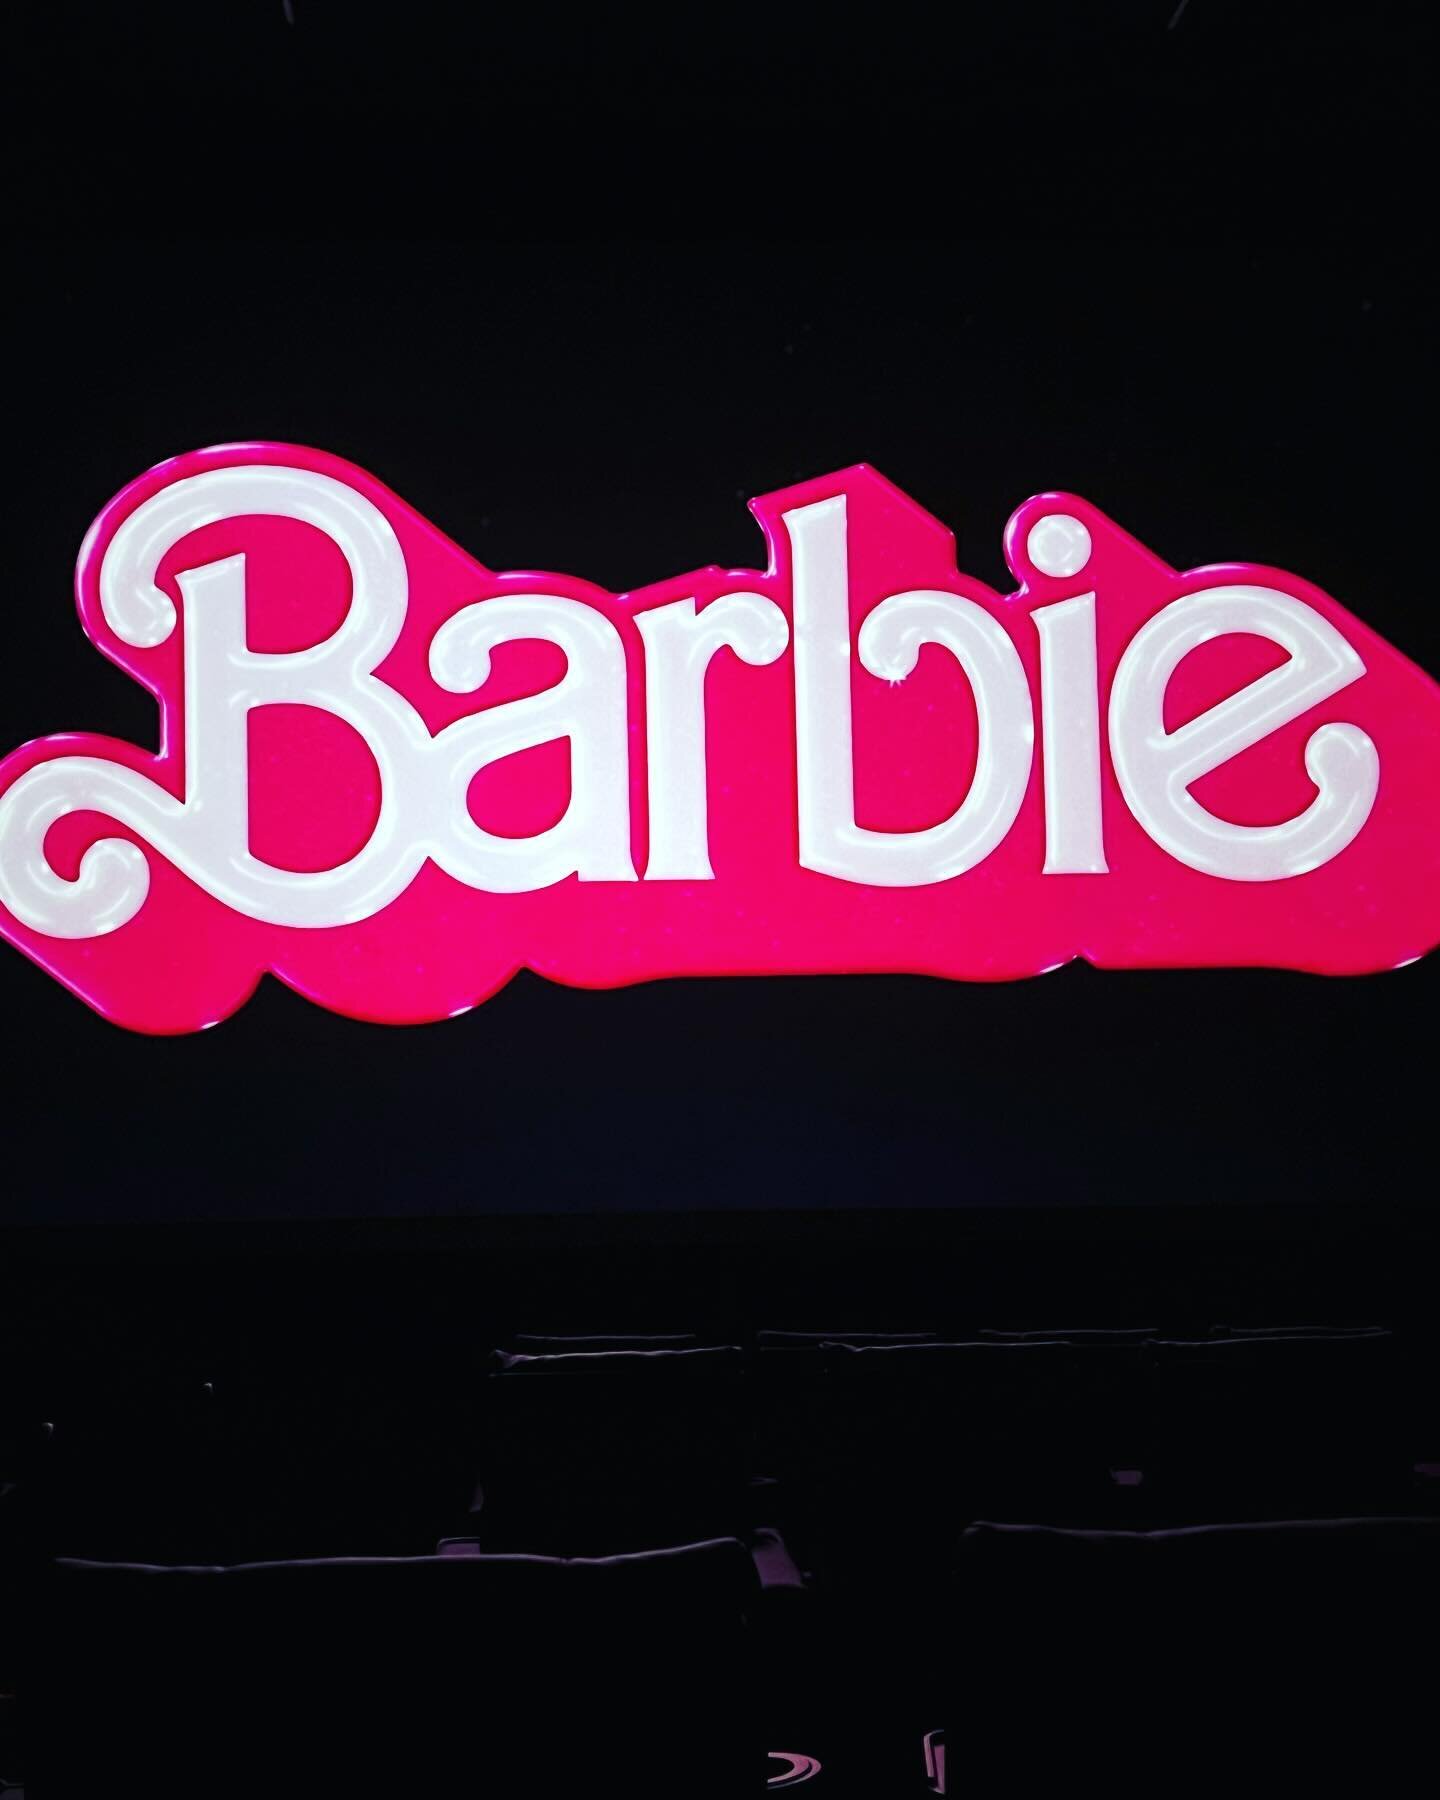 I finally saw Barbie. 

I&rsquo;m unwell and will report back. 🙃

#barbie #barbiemovie #millennials #feminism #cognitivedissonance #patriarchy